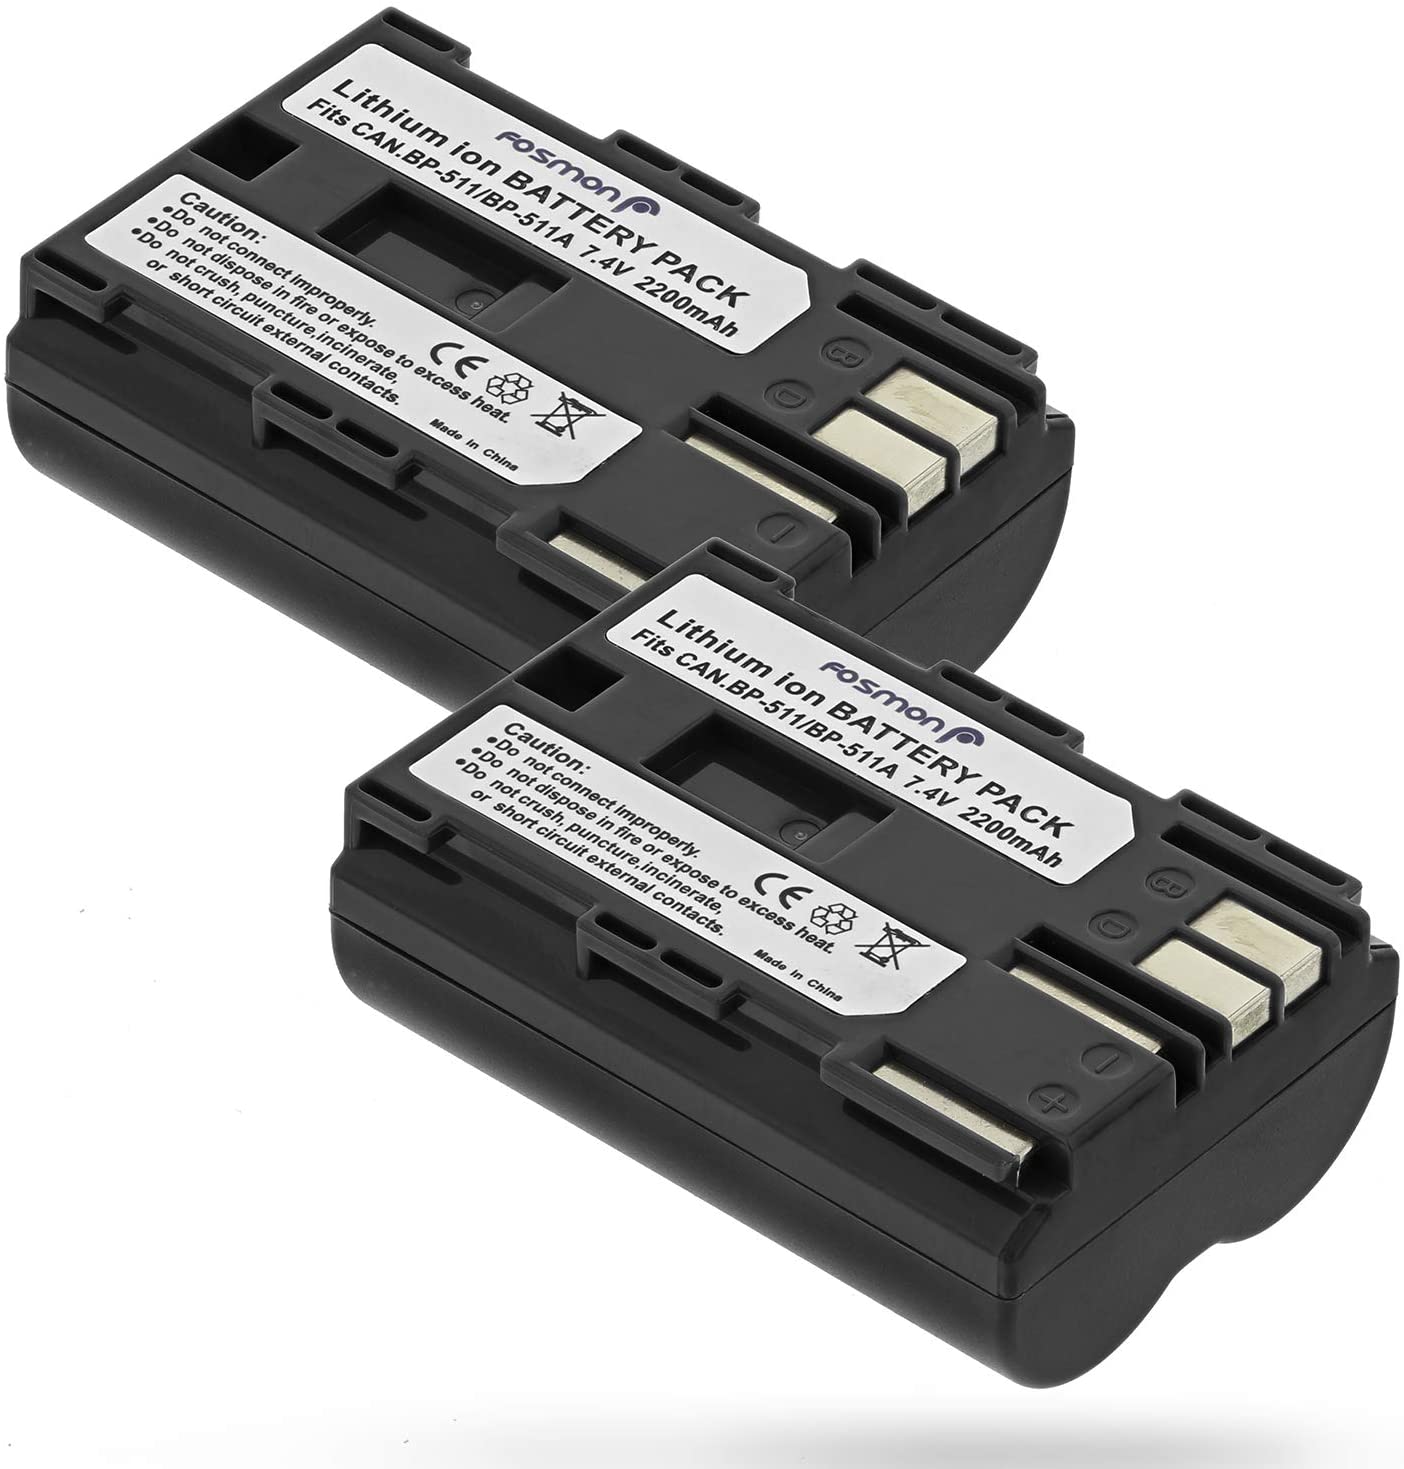 Battery PACK for CANON BP-508 BP-511 BP508 BP511 BP511A